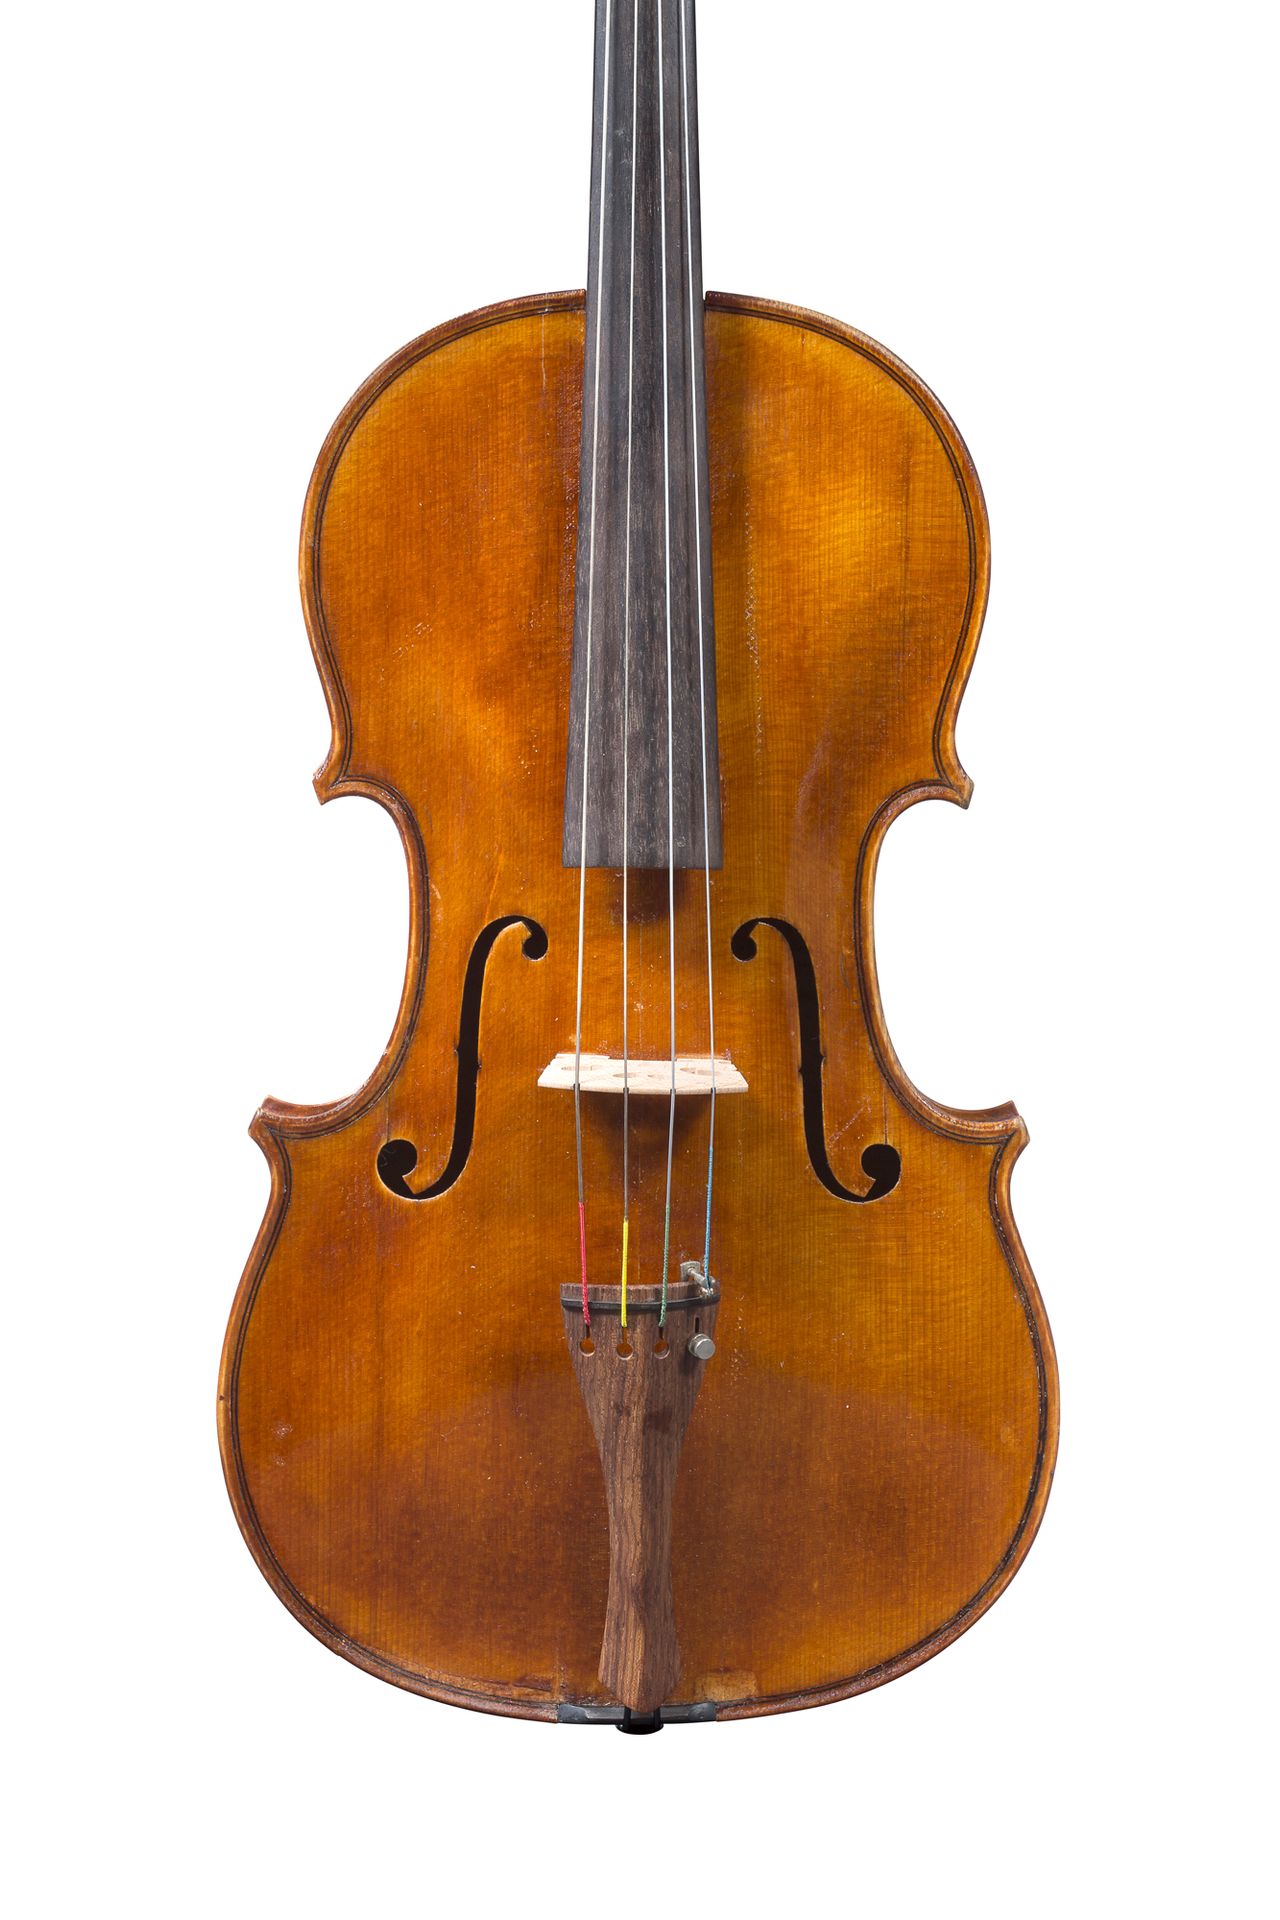 Null 多米尼克-加兰德的中提琴
米勒库尔特的小提琴制造商
贴有Giami Casini的标签
左手边的台子和右手边的台子腿断了
状态良好
随时可以演奏
背面&hellip;